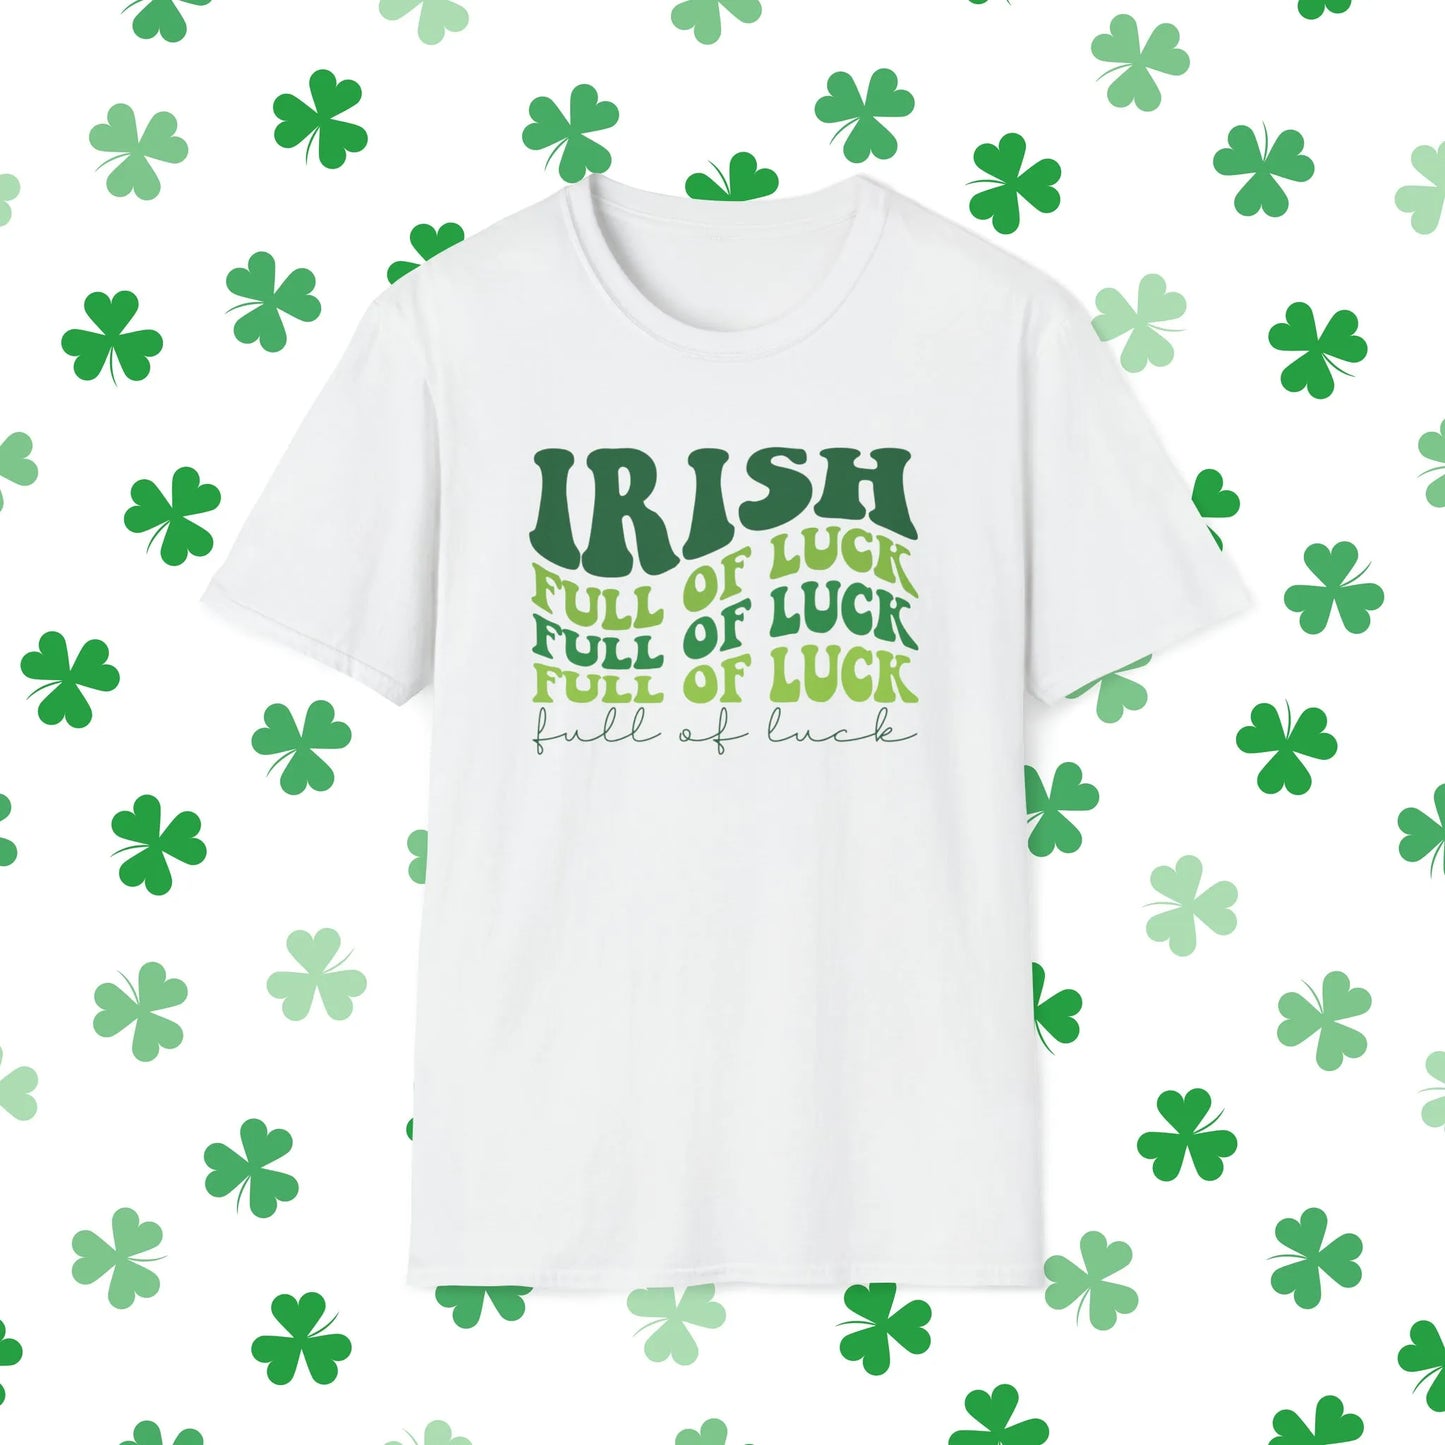 Irish Full Of Luck Retro-Style St. Patrick's Day T-Shirt - Comfort & Charm - Irish Full Of Luck Shirt White Front